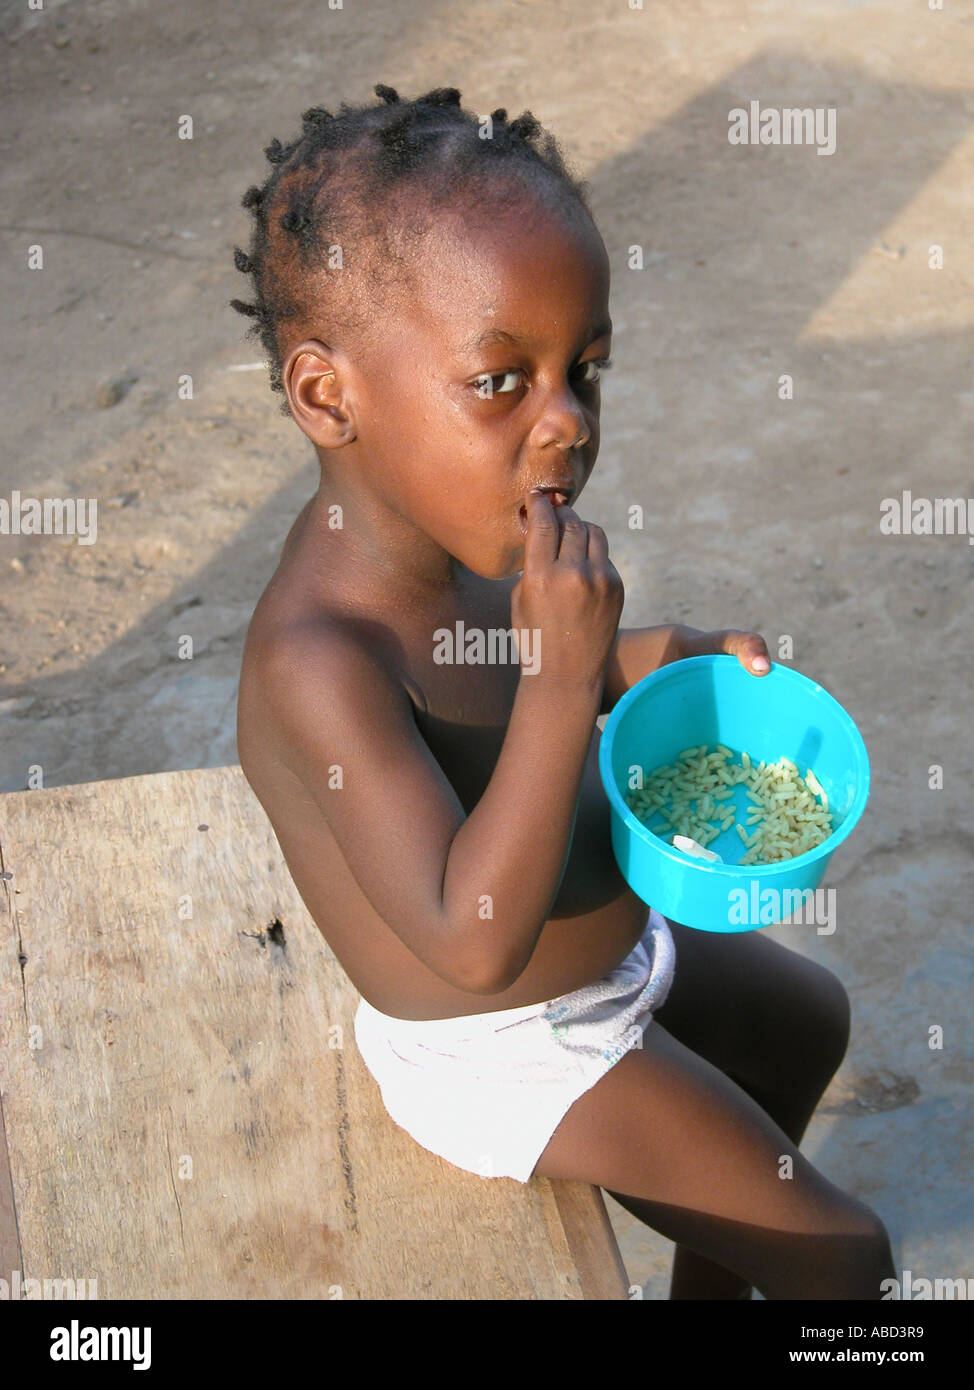 Africa - Nigeria - eating child Stock Photo